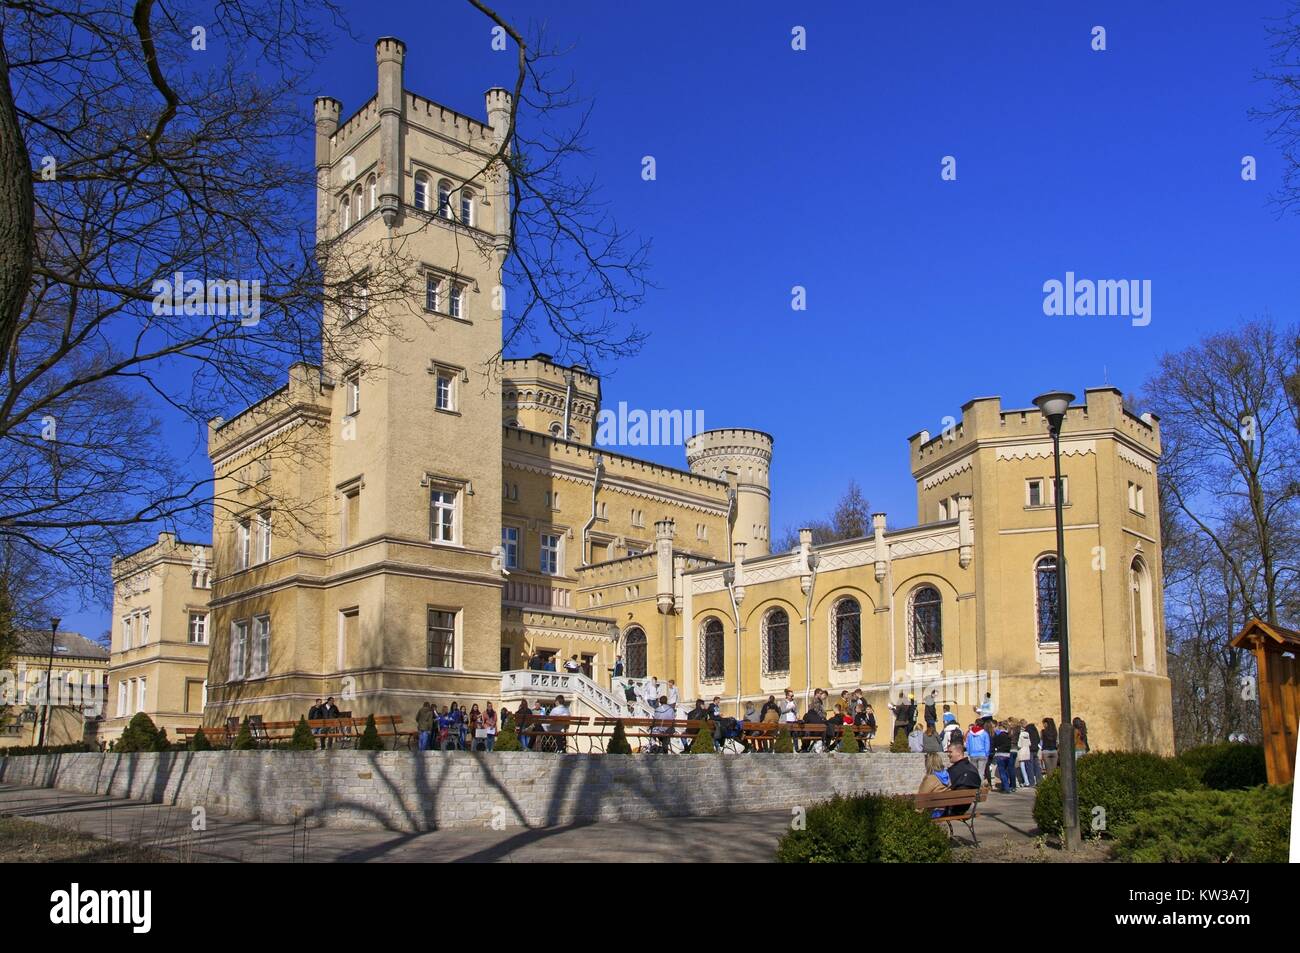 Neo-Gothic Narzymski Palace, Jablonowo Pomorskie, Kuyavian-Pomeranian Voivodeship, Poland Stock Photo